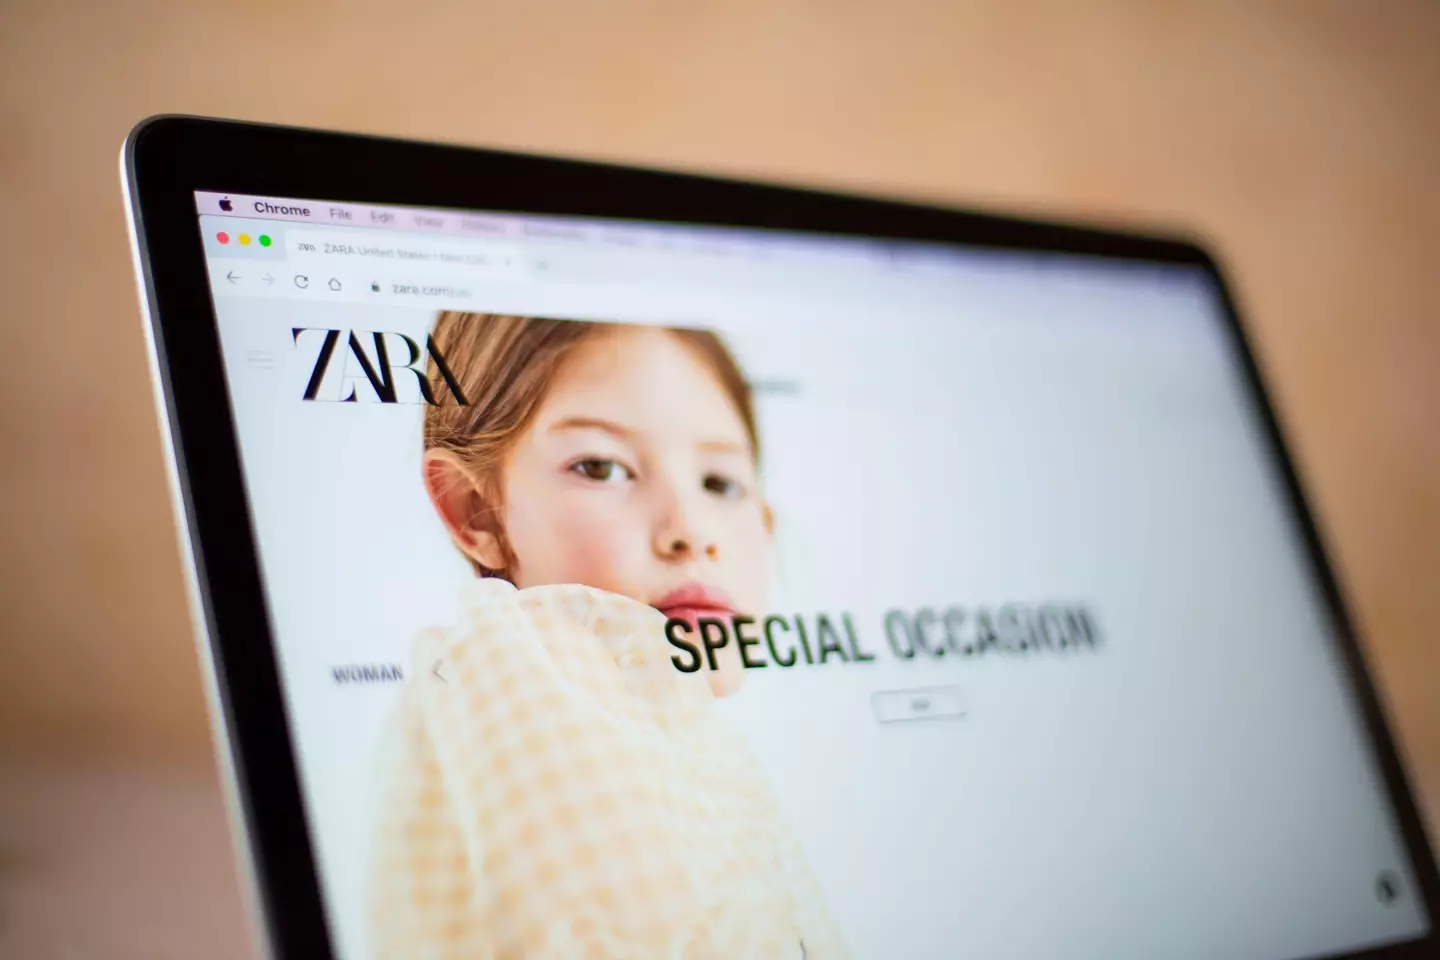 MoneySavingExpert.com investigated Zara's online prices.